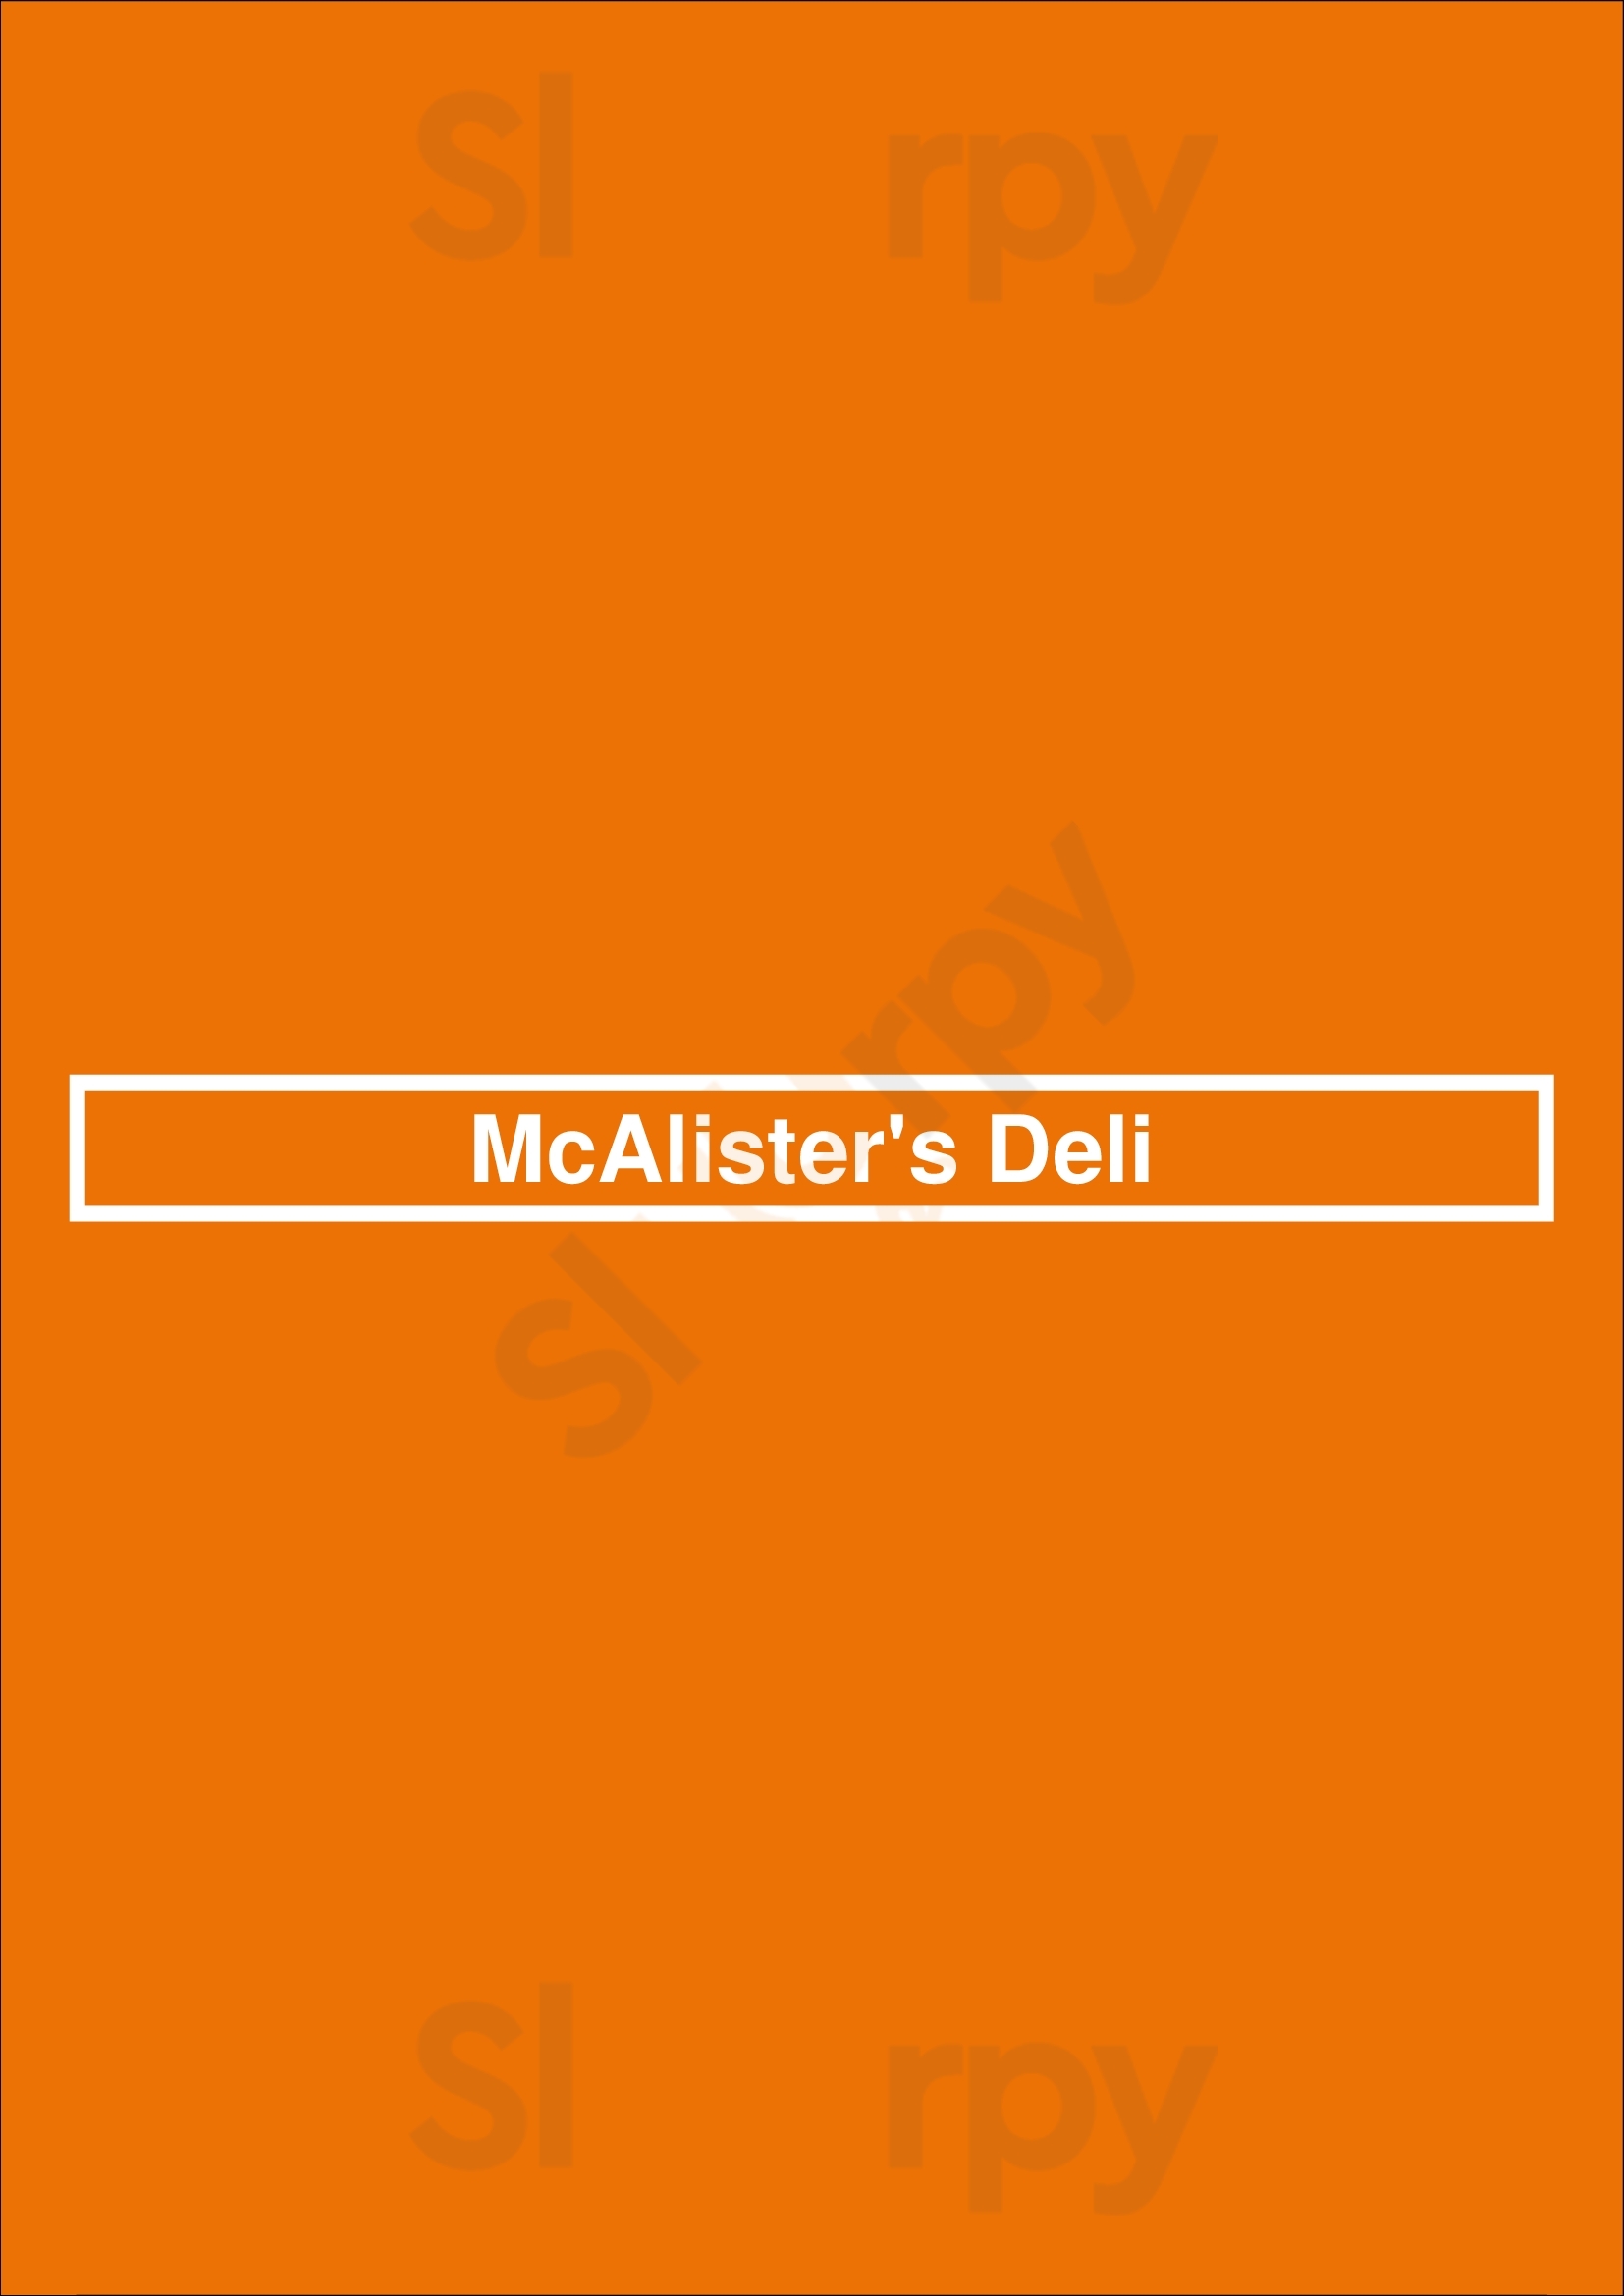 Mcalister's Deli Indianapolis Menu - 1